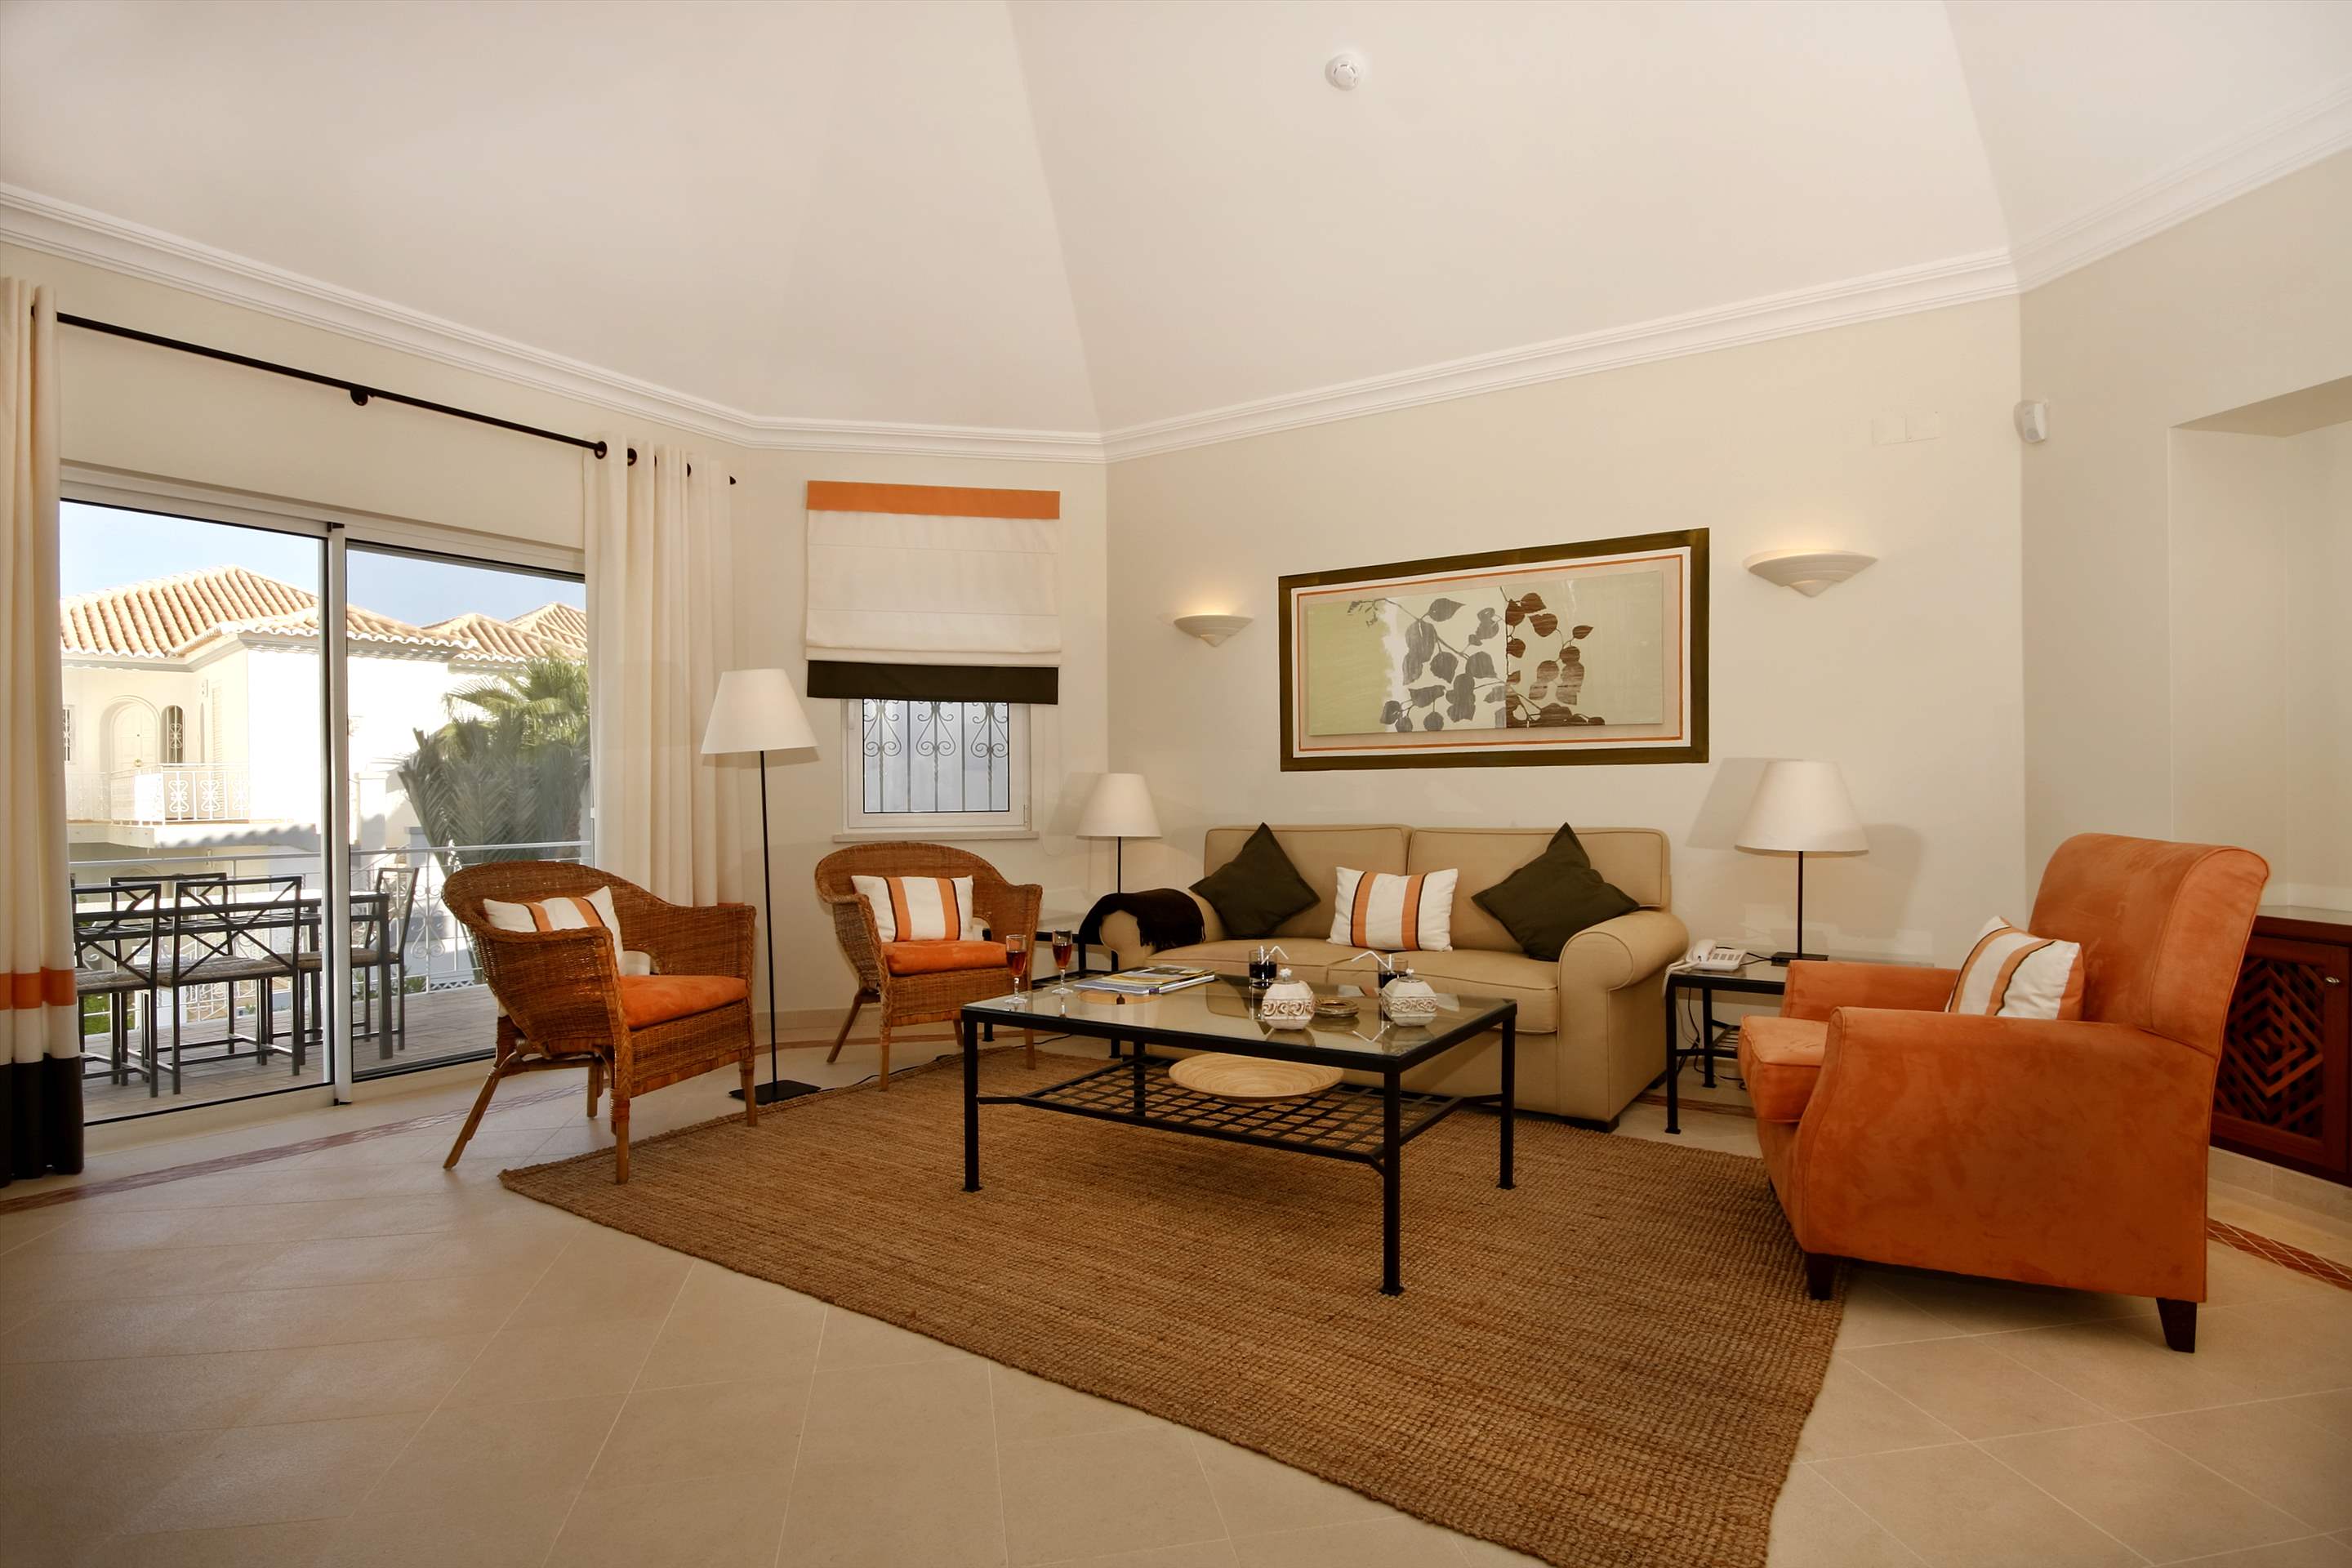 Encosta do Lago 2 Bedroom Apt, Top floor, 2 bedroom apartment in Encosta do Lago Resort, Algarve Photo #3